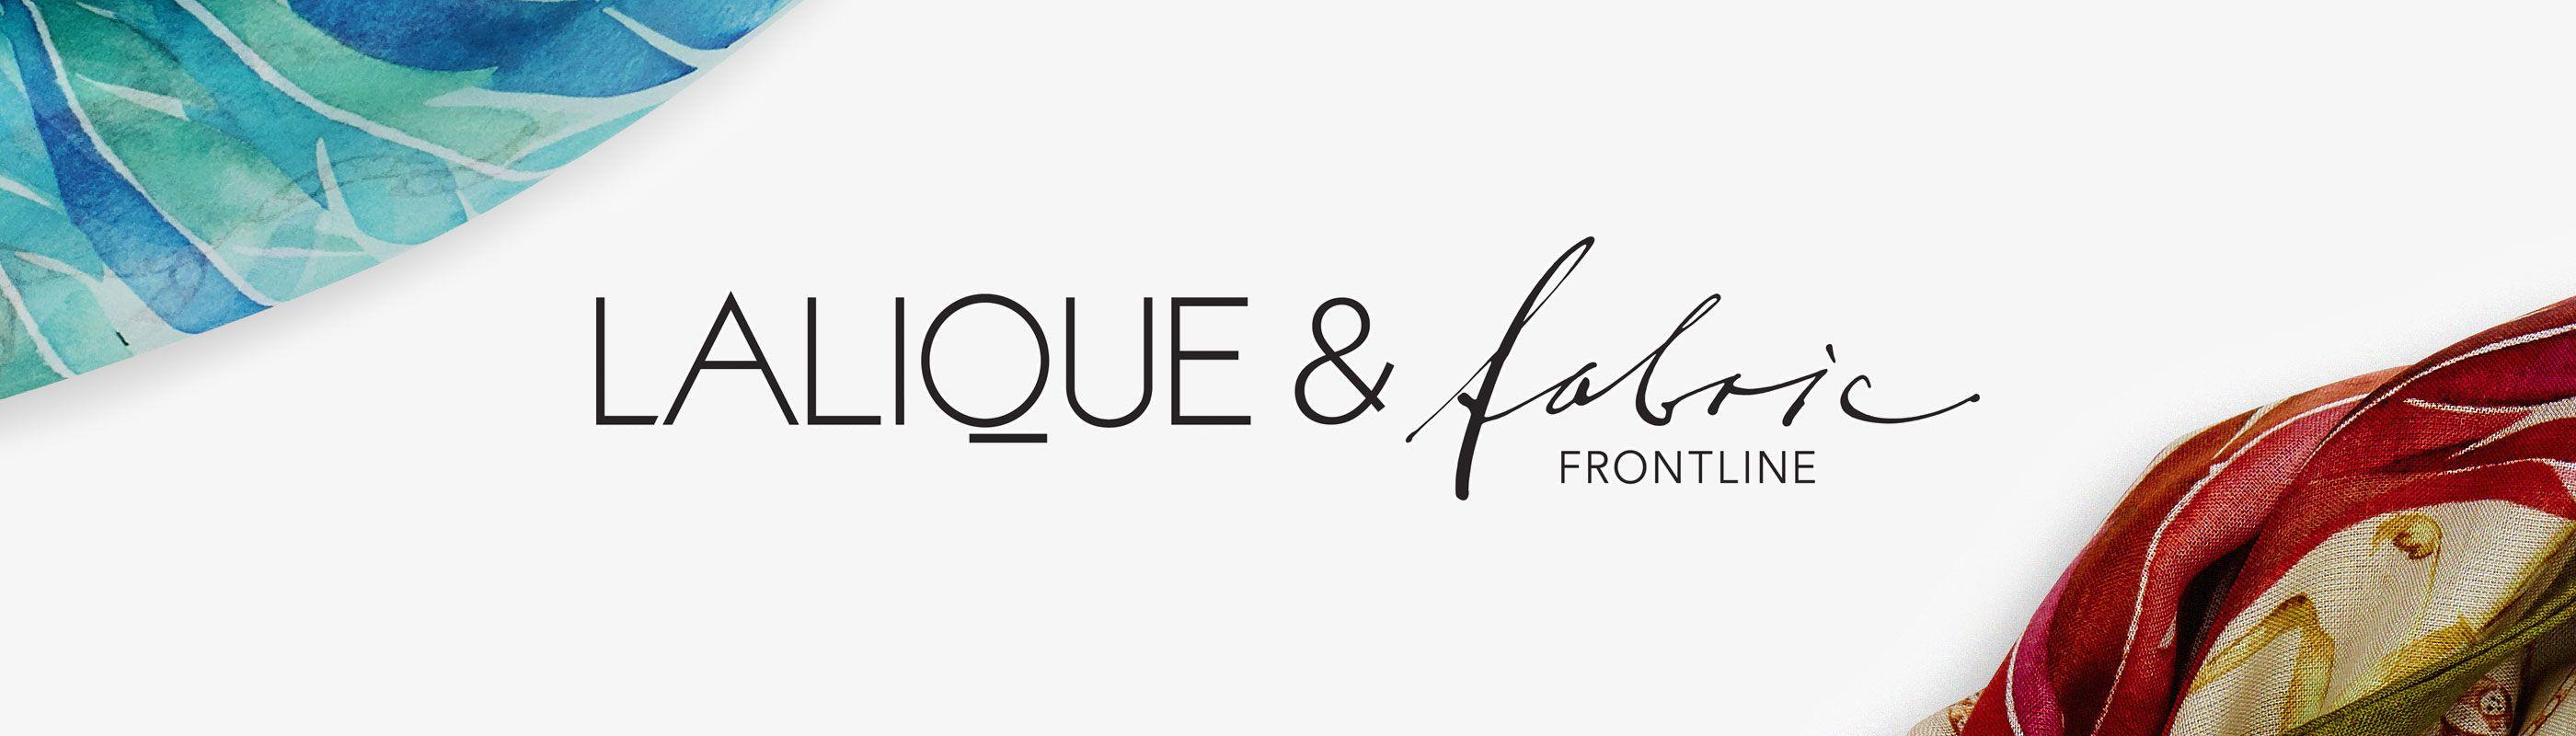 Lalique Logo - Lalique & Fabric Frontline collaboration | Lalique